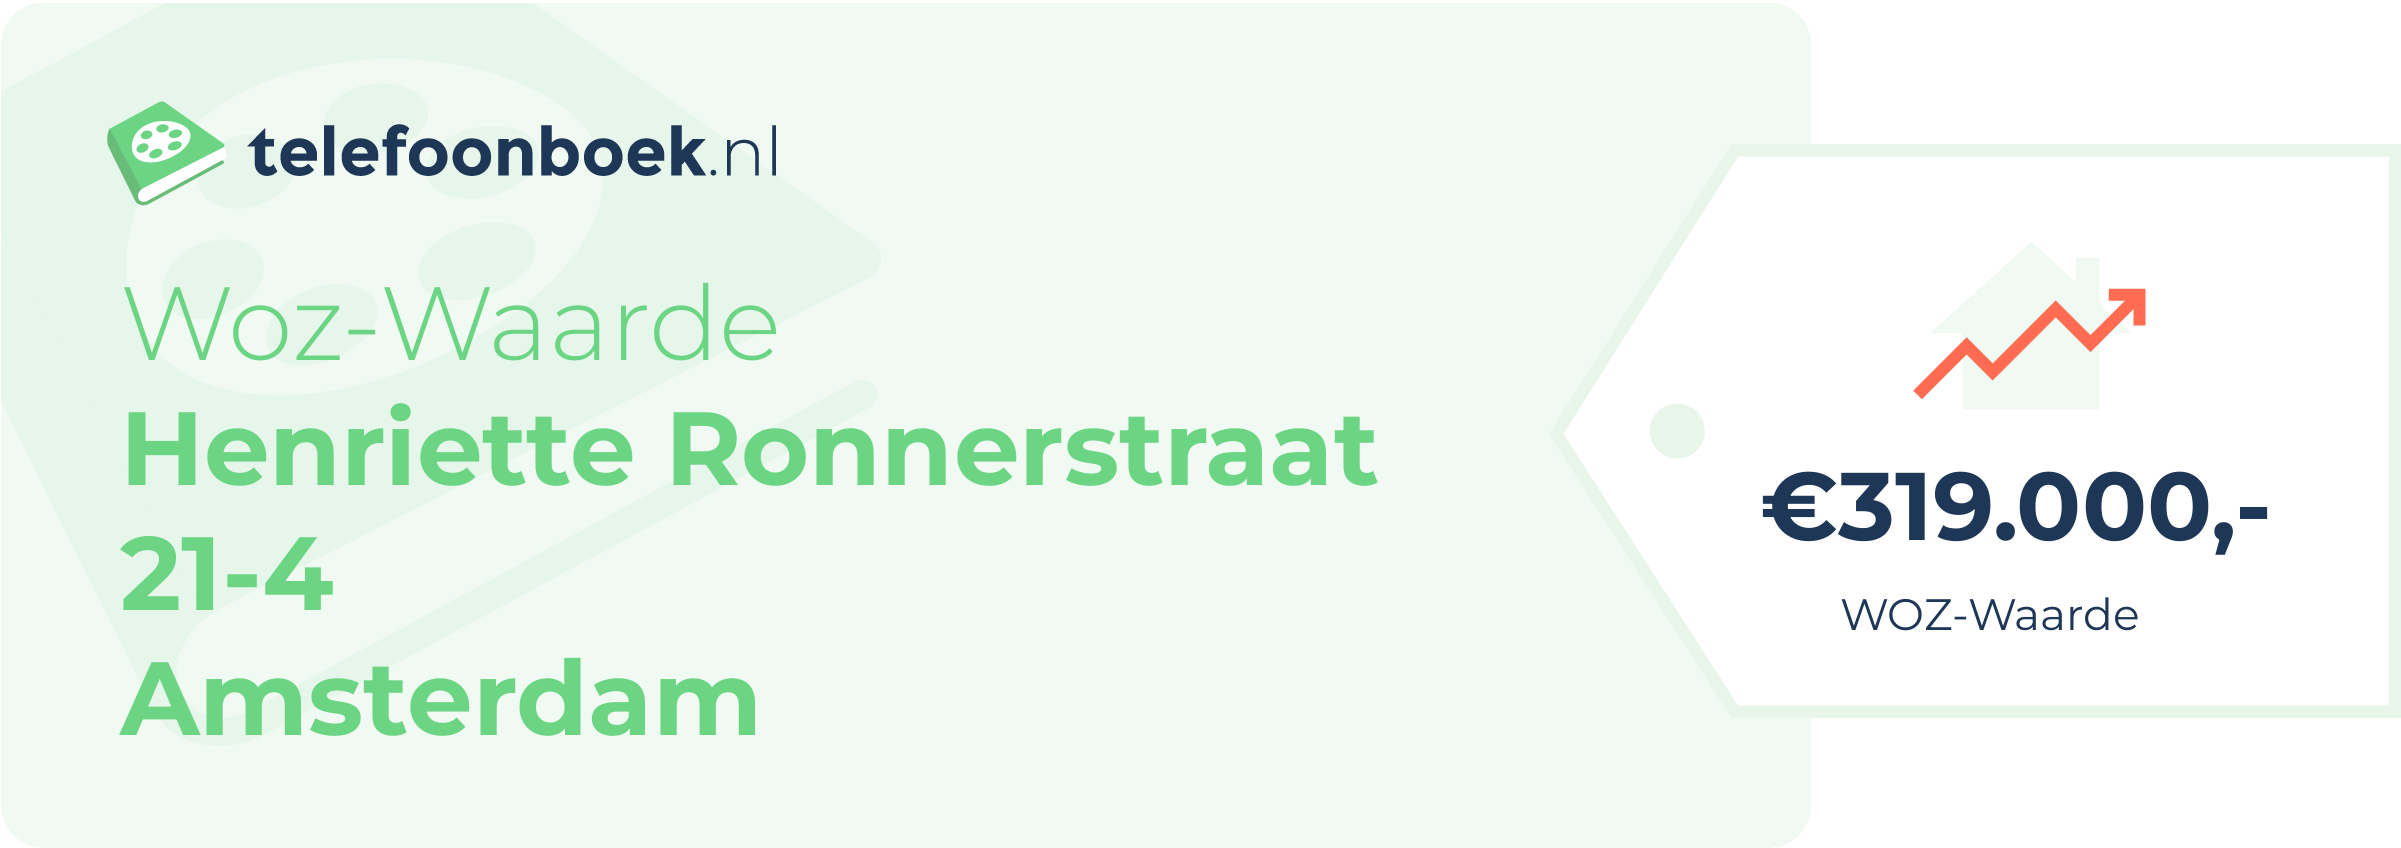 WOZ-waarde Henriette Ronnerstraat 21-4 Amsterdam